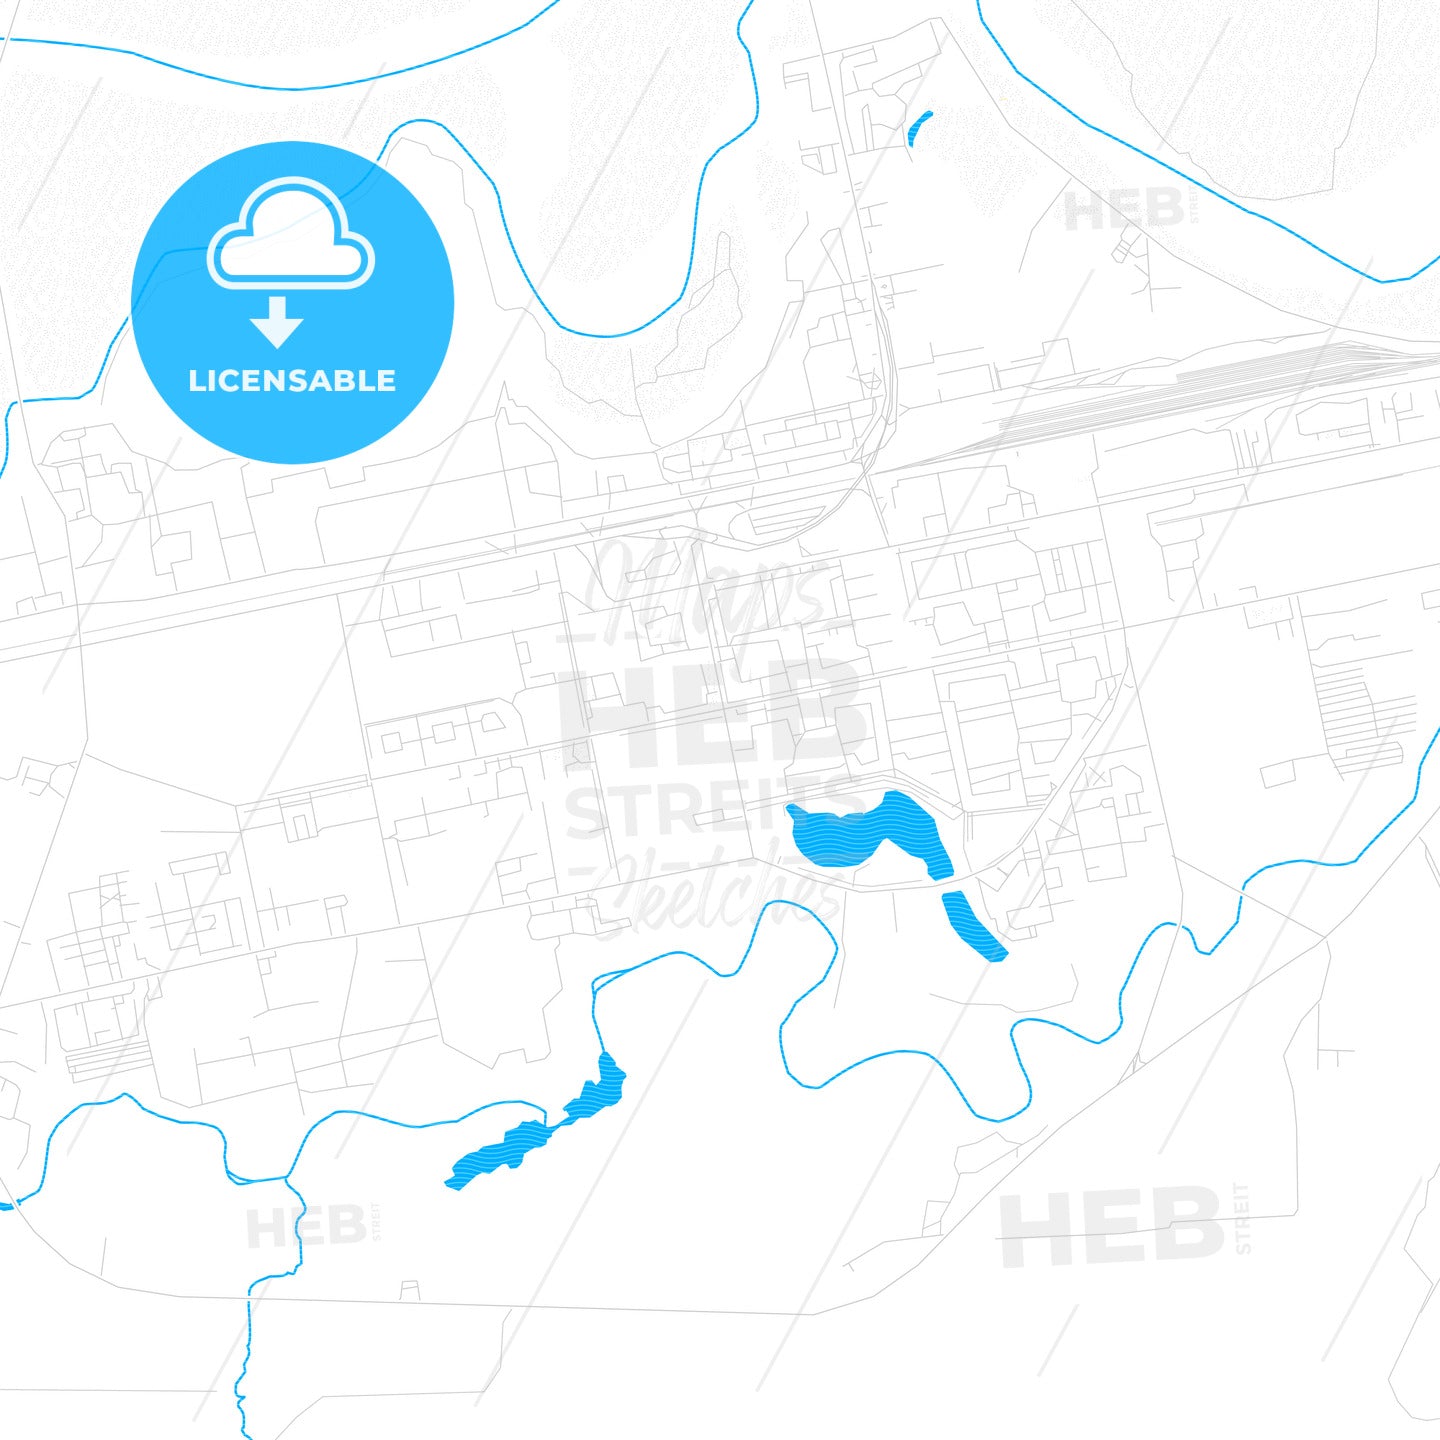 Novy Urengoy, Russia PDF vector map with water in focus